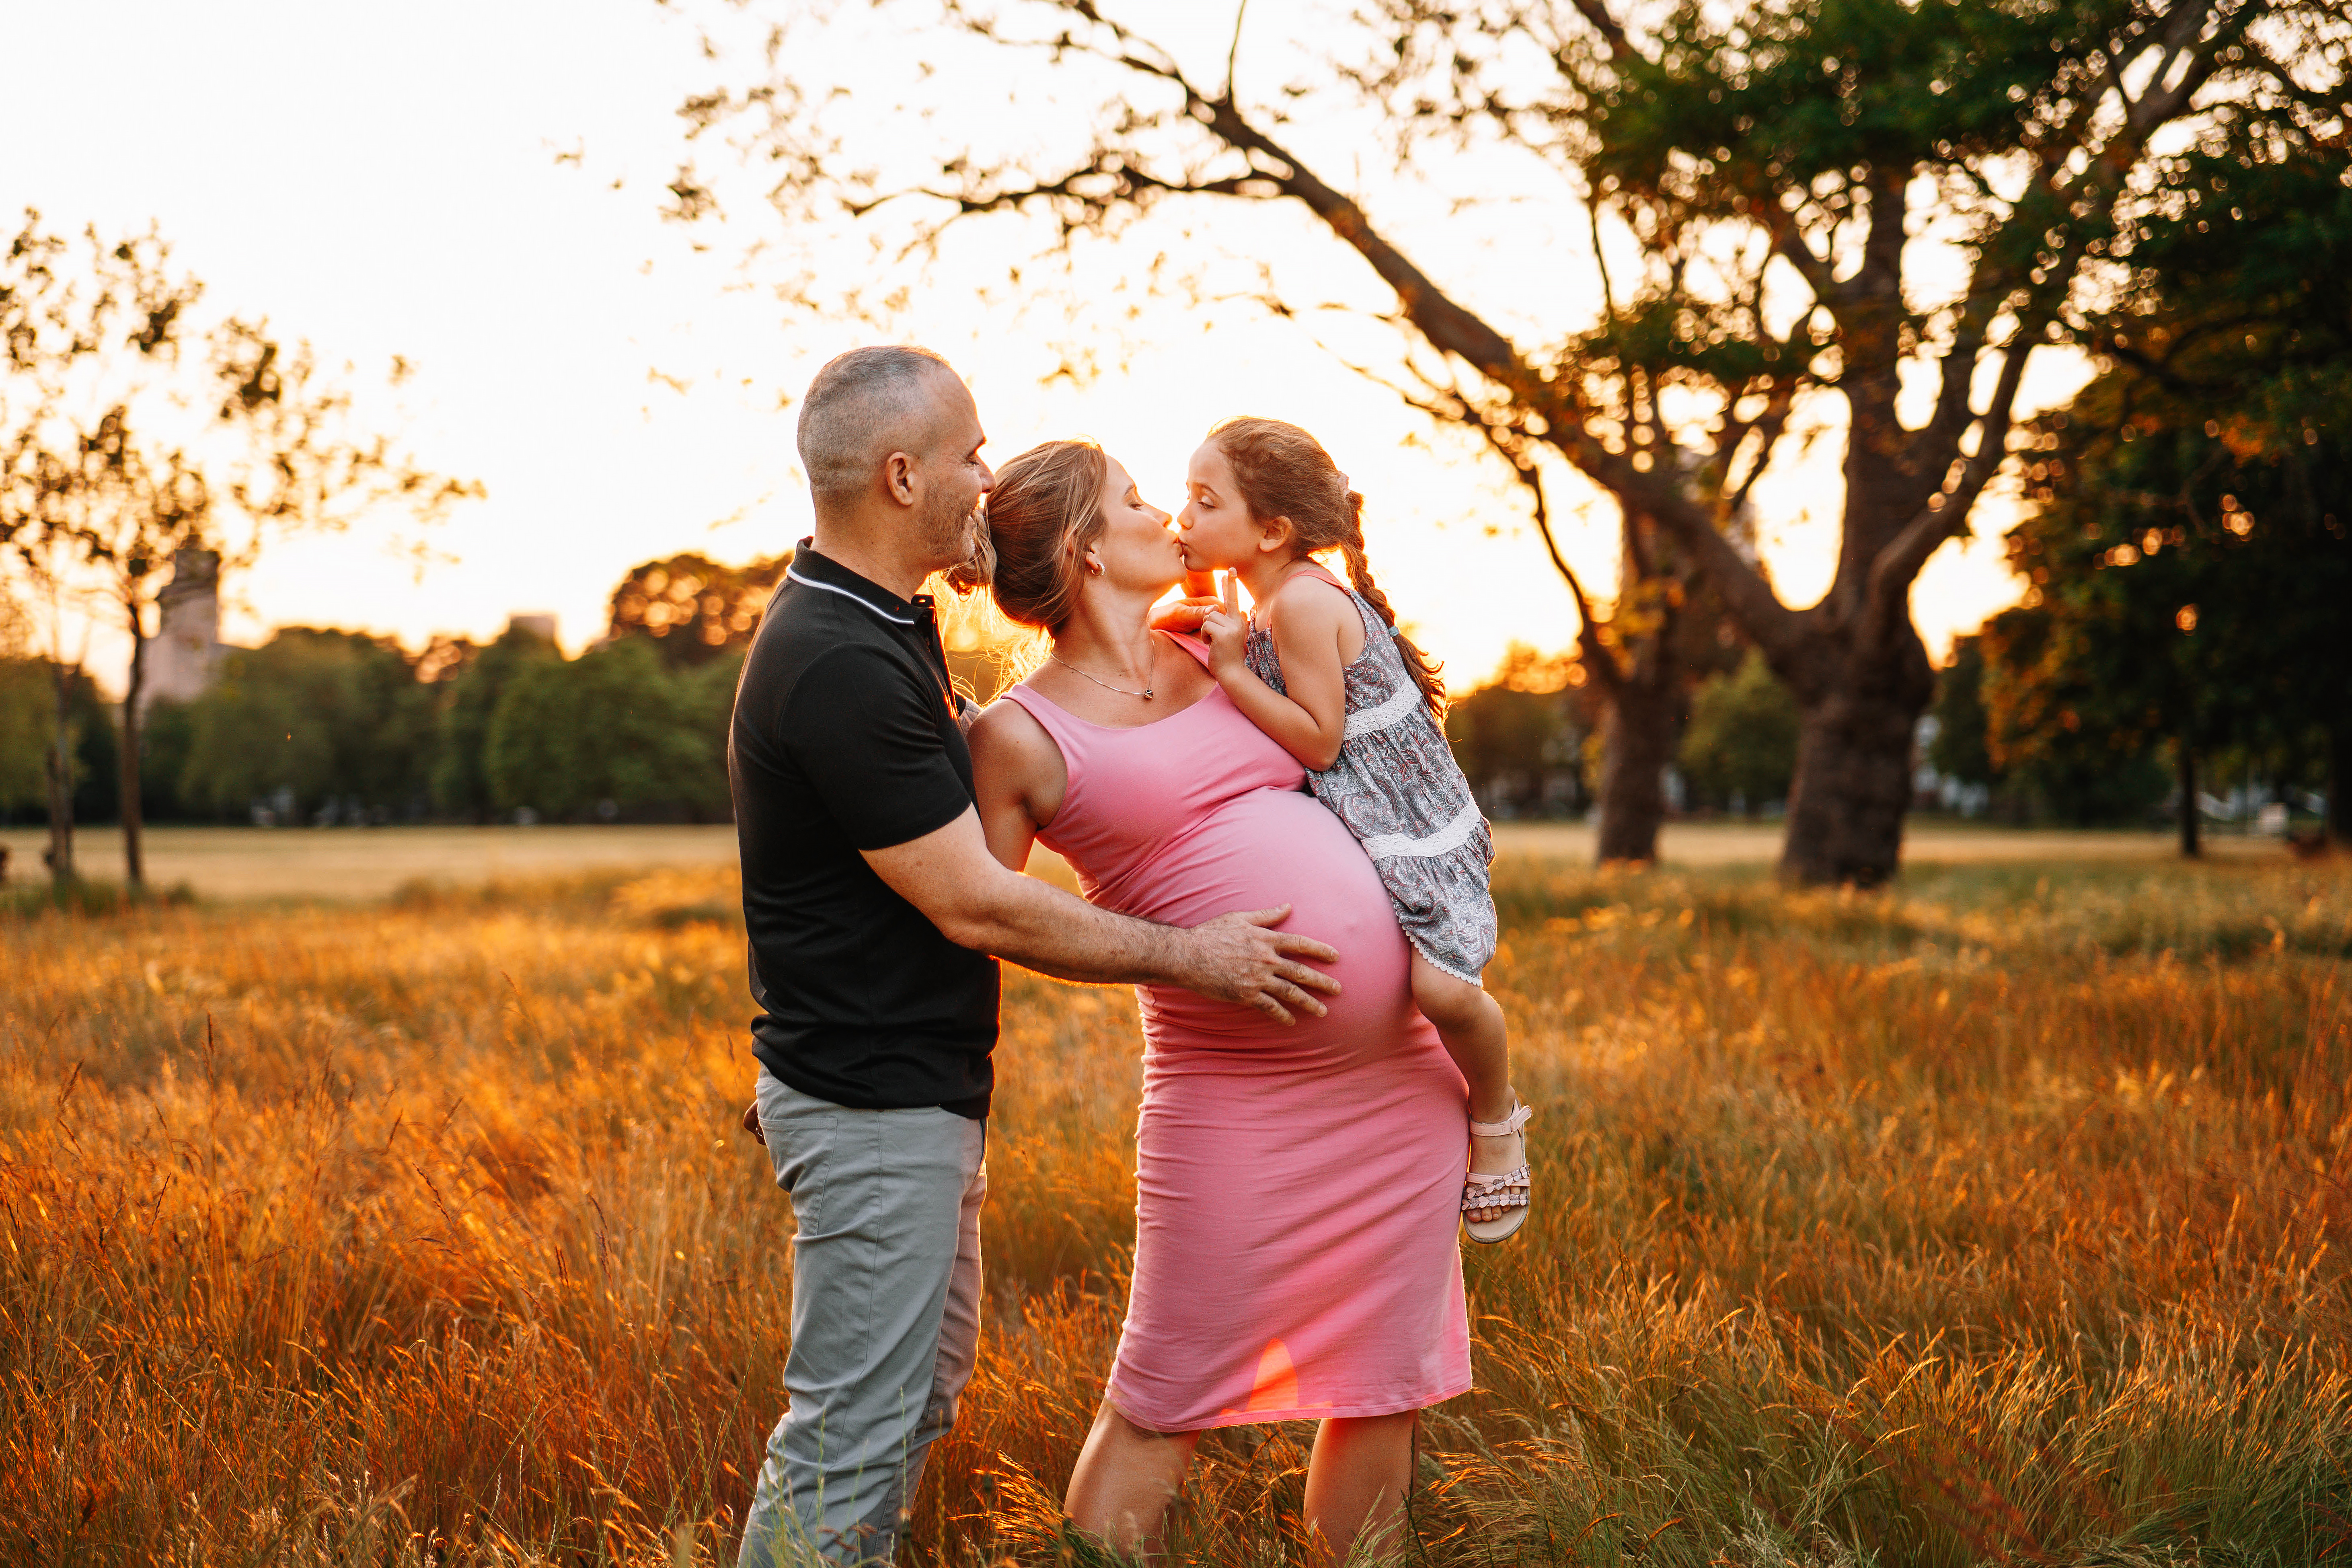 Family photoshoot, pregnancy, sunset in London park